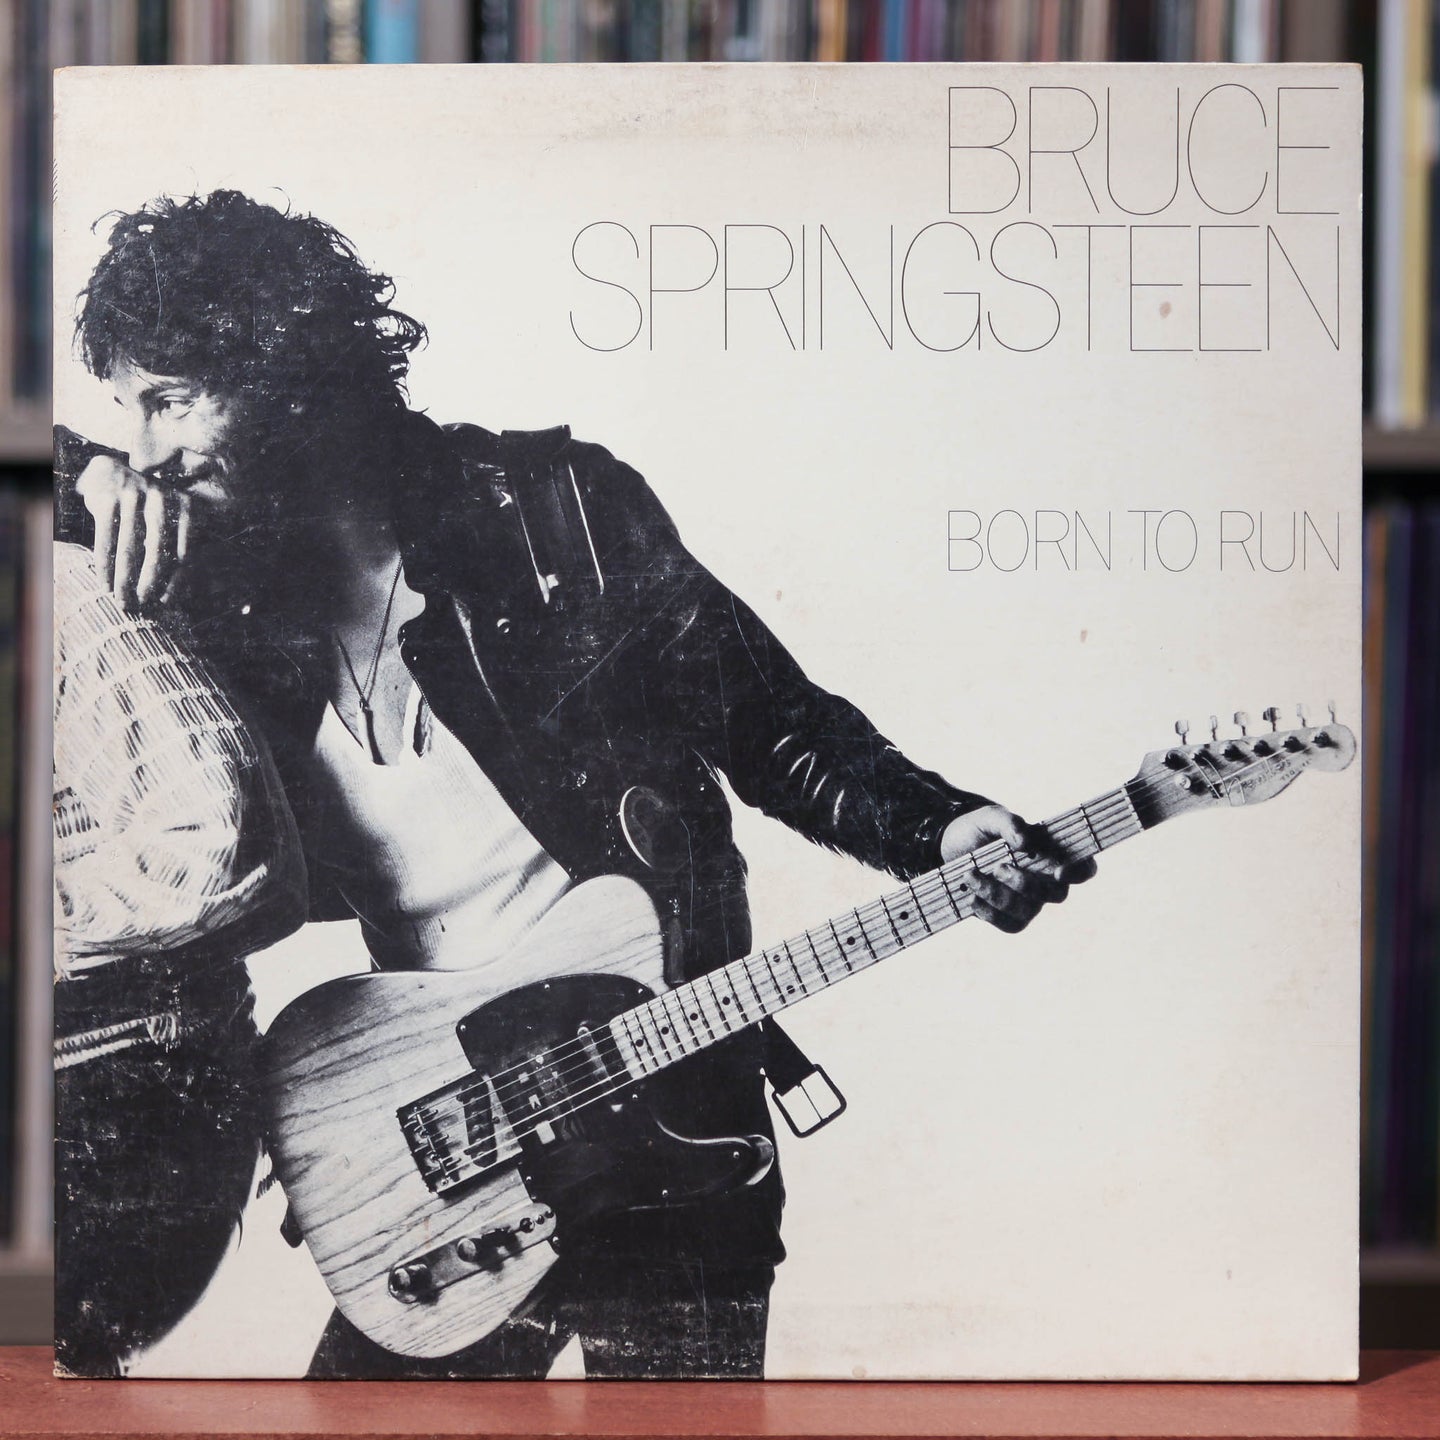 Bruce Springsteen - Born To Run. - 1975  Columbia, VG+/VG+